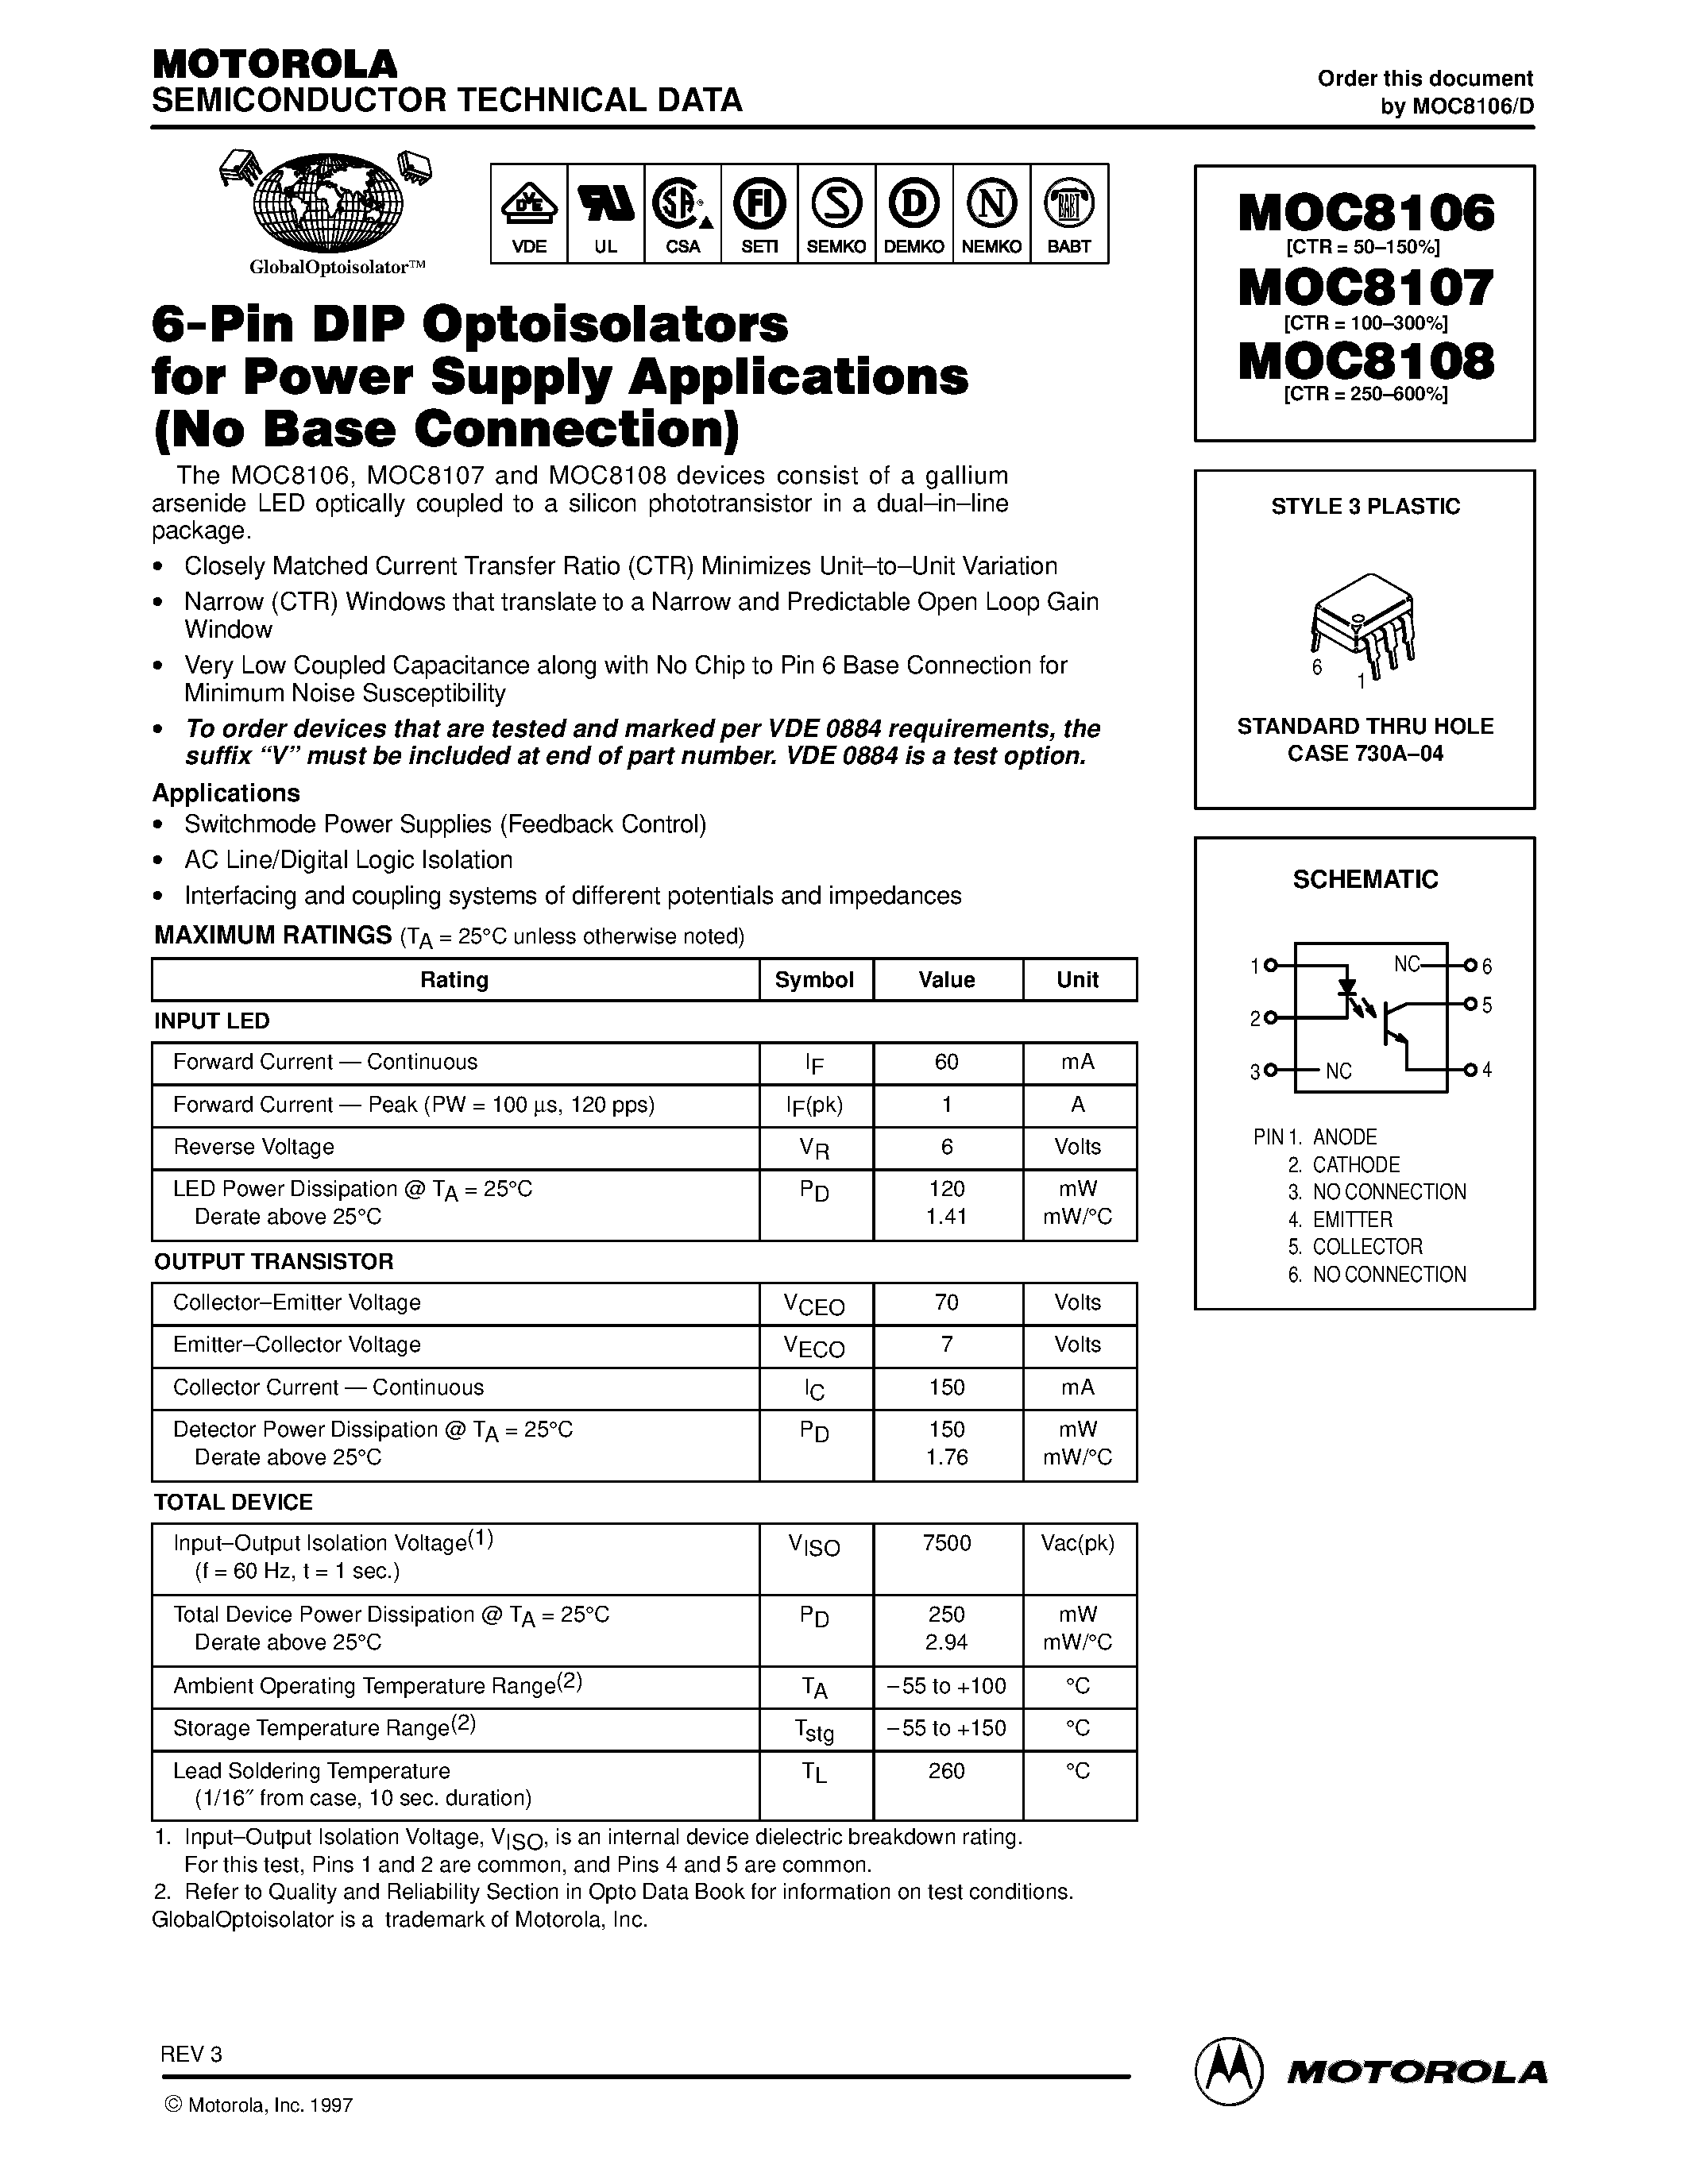 Datasheet MOC8106 - (MOC8106 / MOC8107 / MOC8108) 6-Pin DIP Optoisolators for Power Supply Applications(No Base Connection) page 1